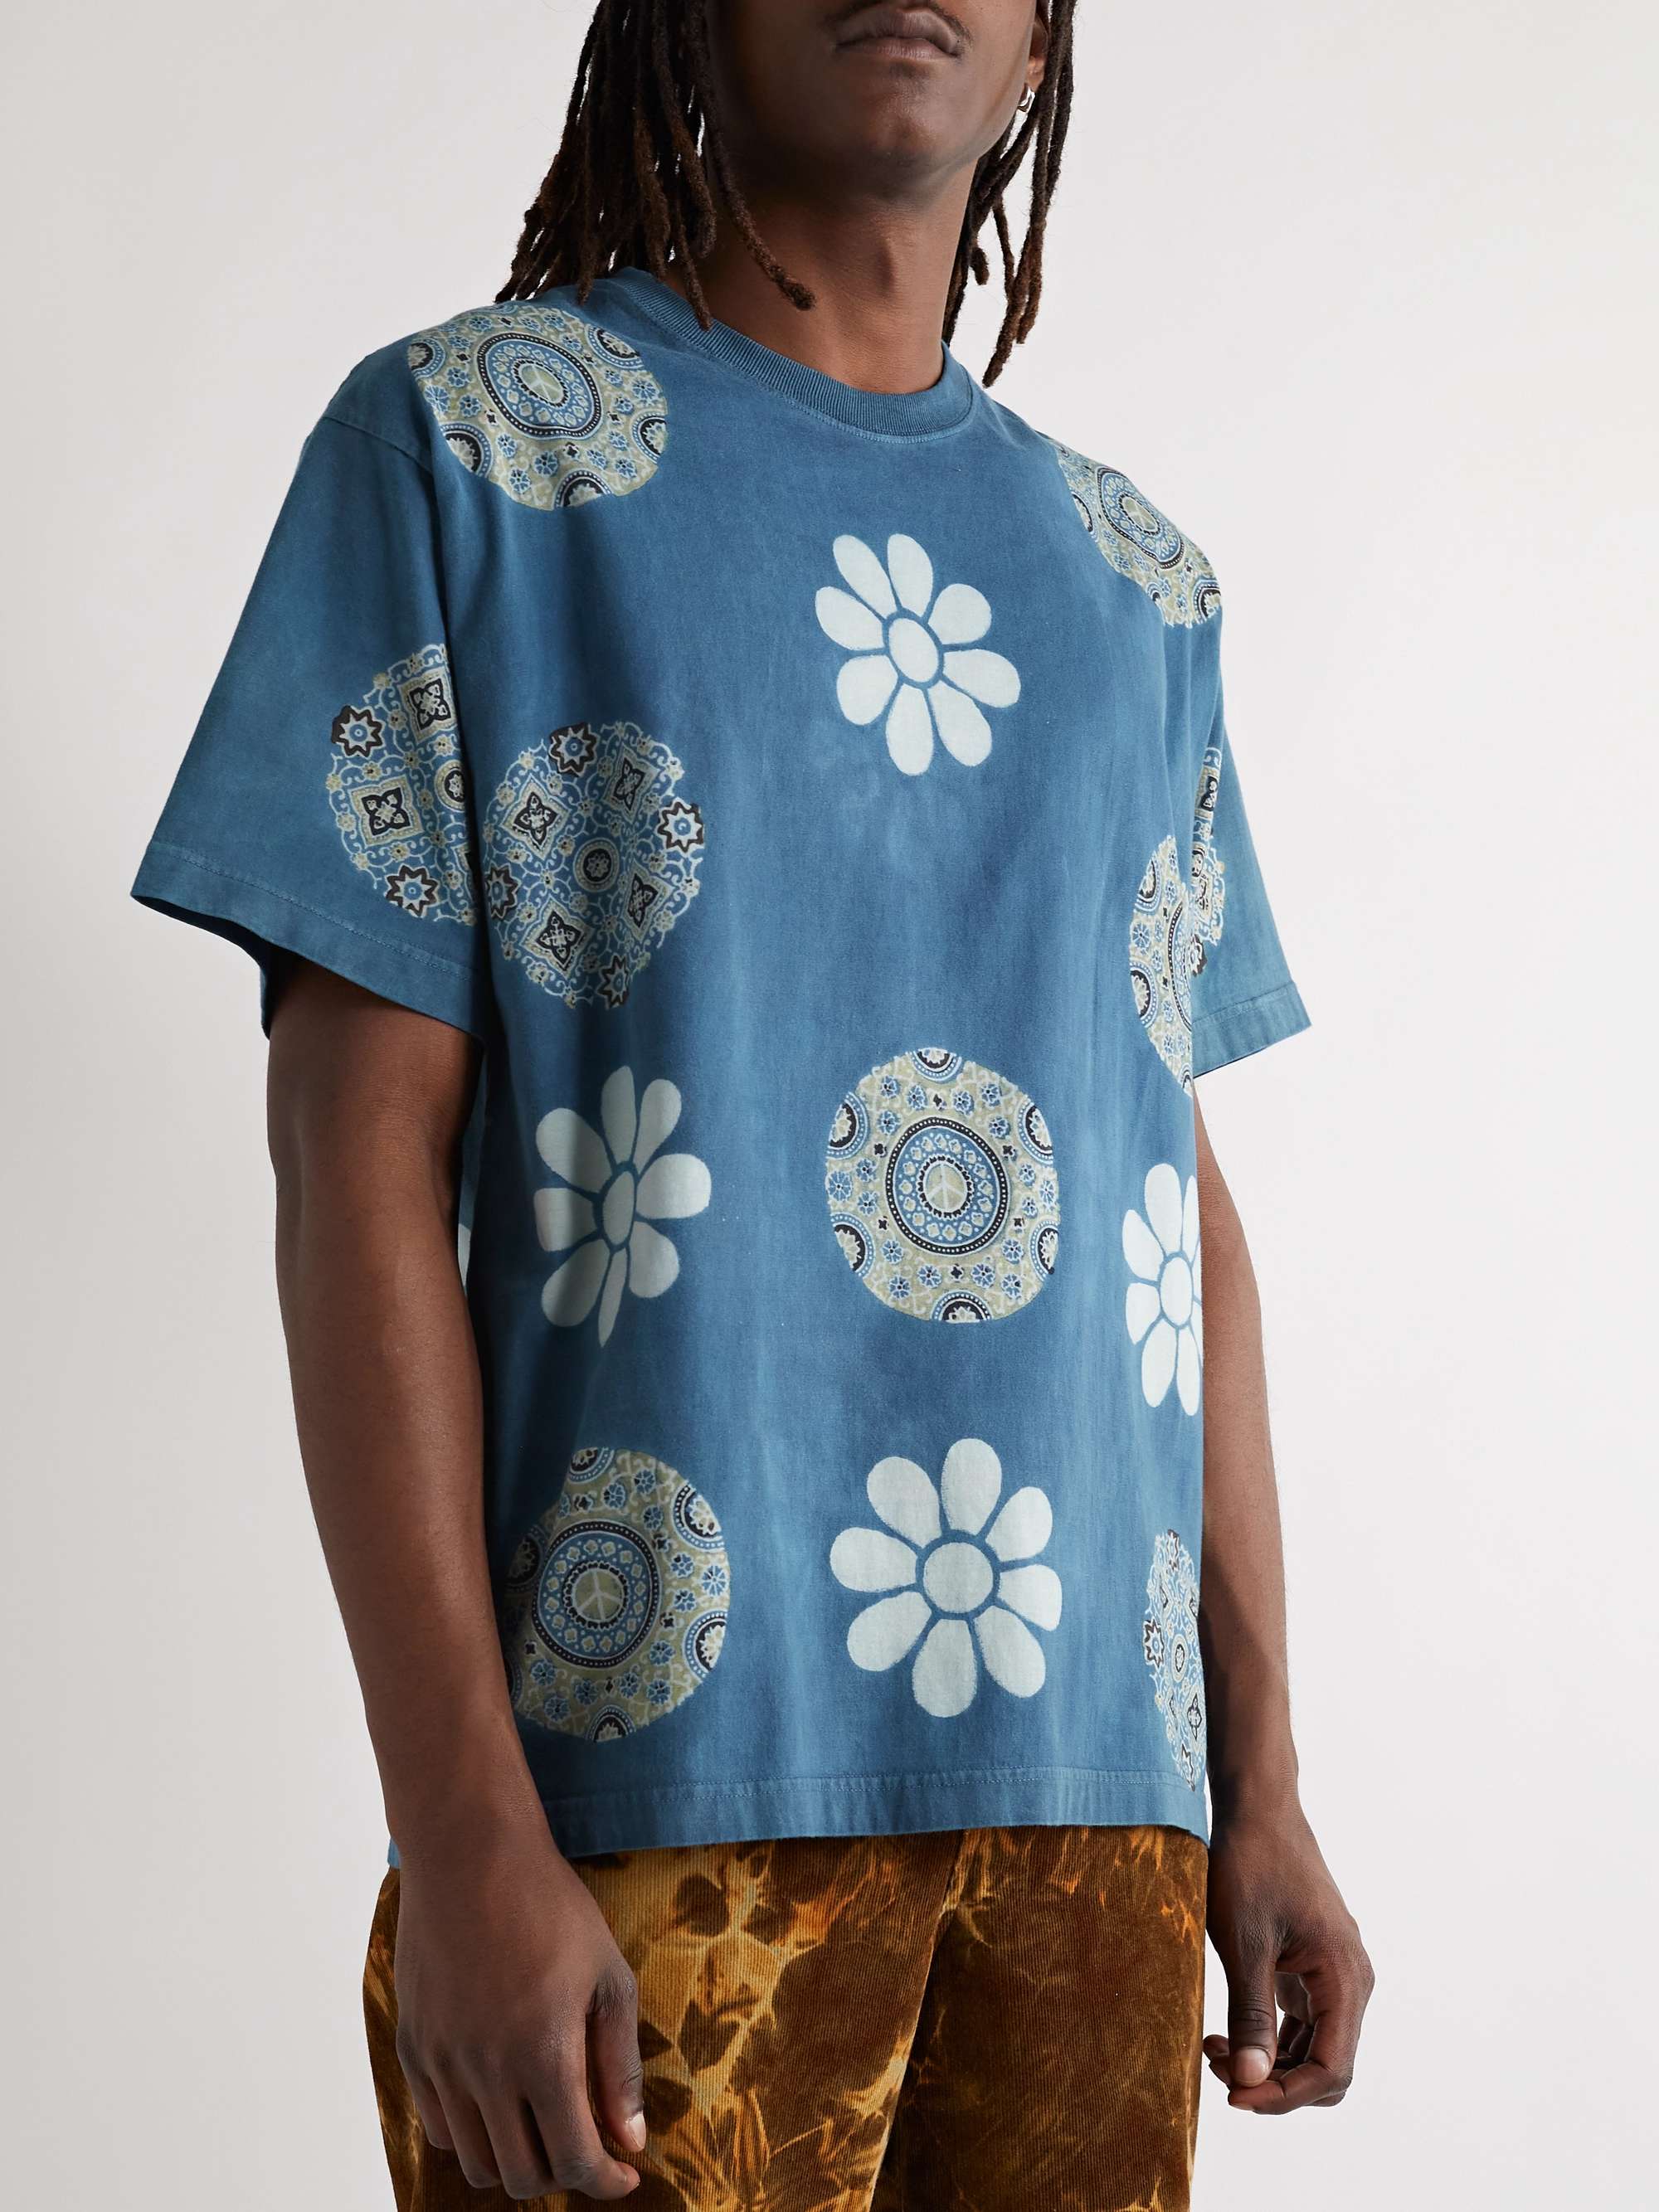 STORY MFG. Grateful Indigo-Dyed Organic Cotton-Jersey T-Shirt